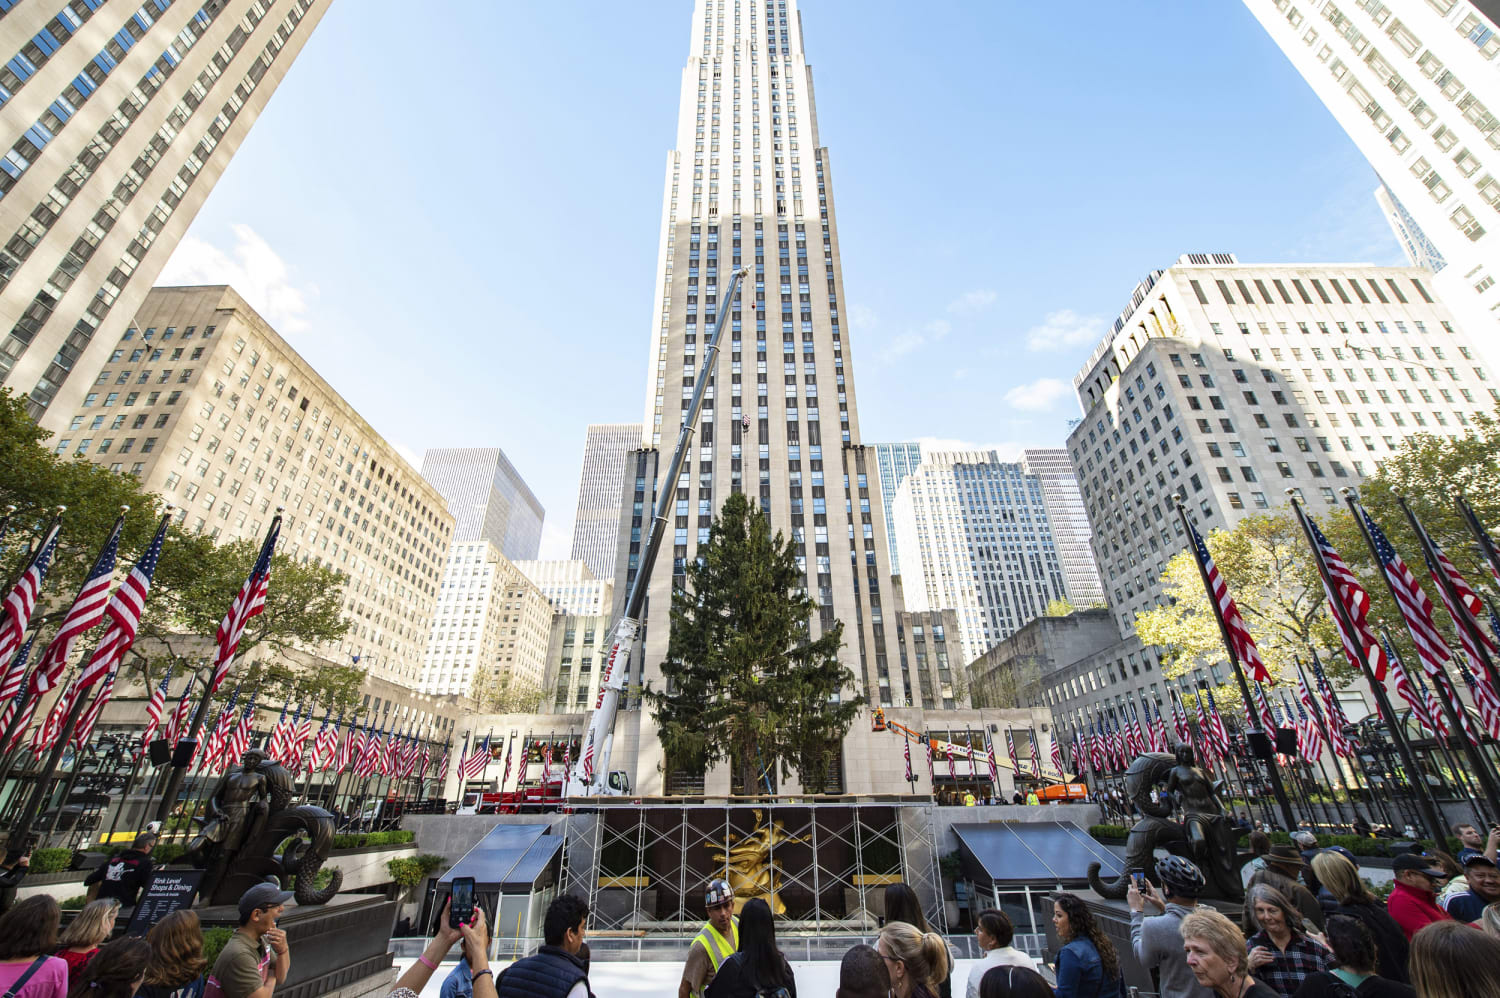 An 82-foot Christmas tree arrives at New York City's Rockefeller Center :  NPR